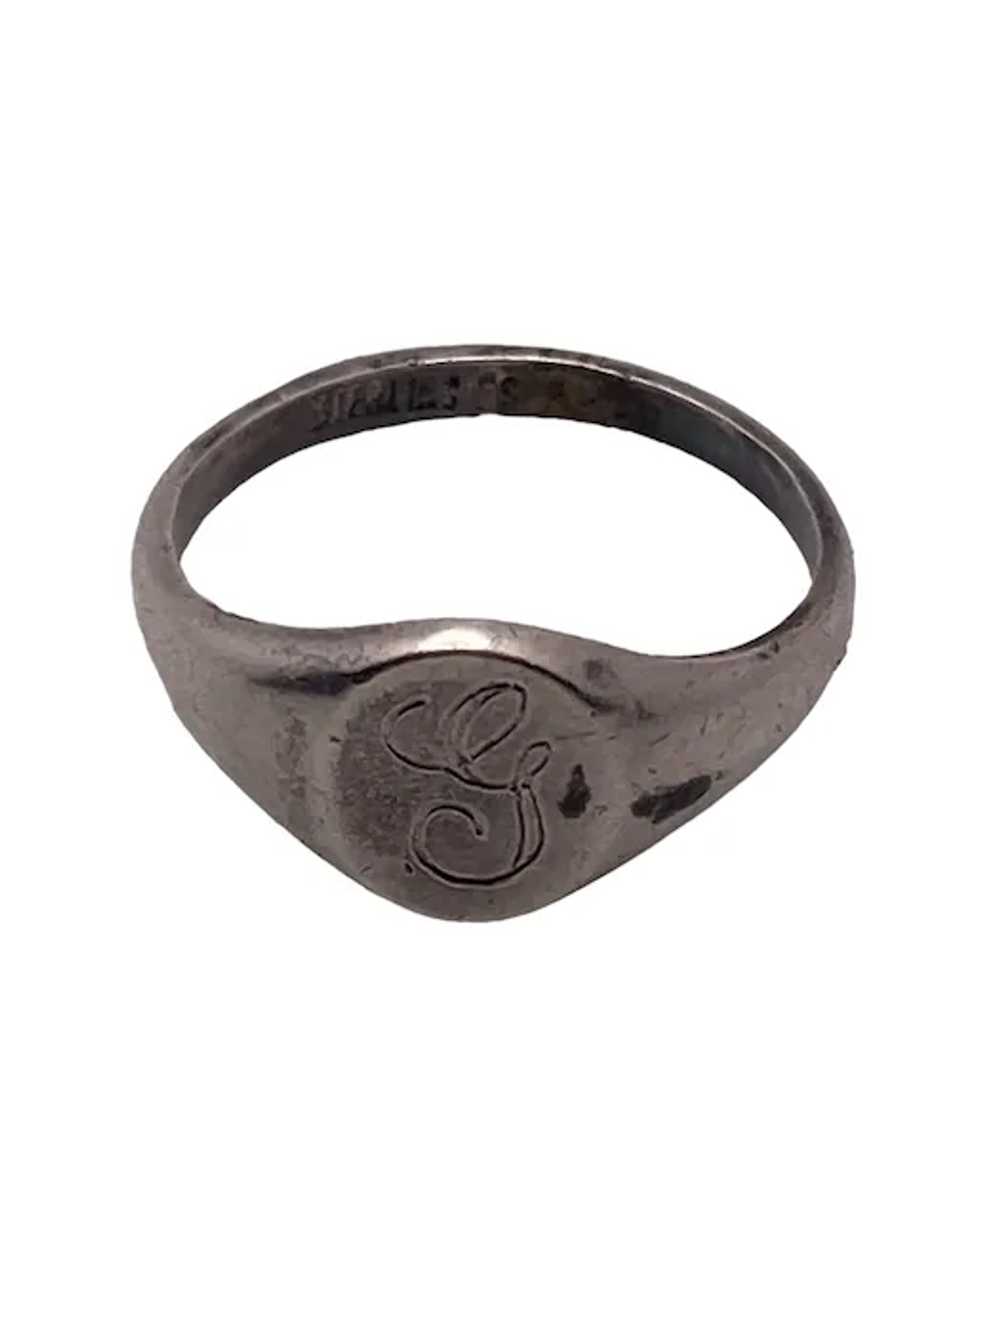 Joseph Esposito Small Sterling Silver Signet Ring - image 4